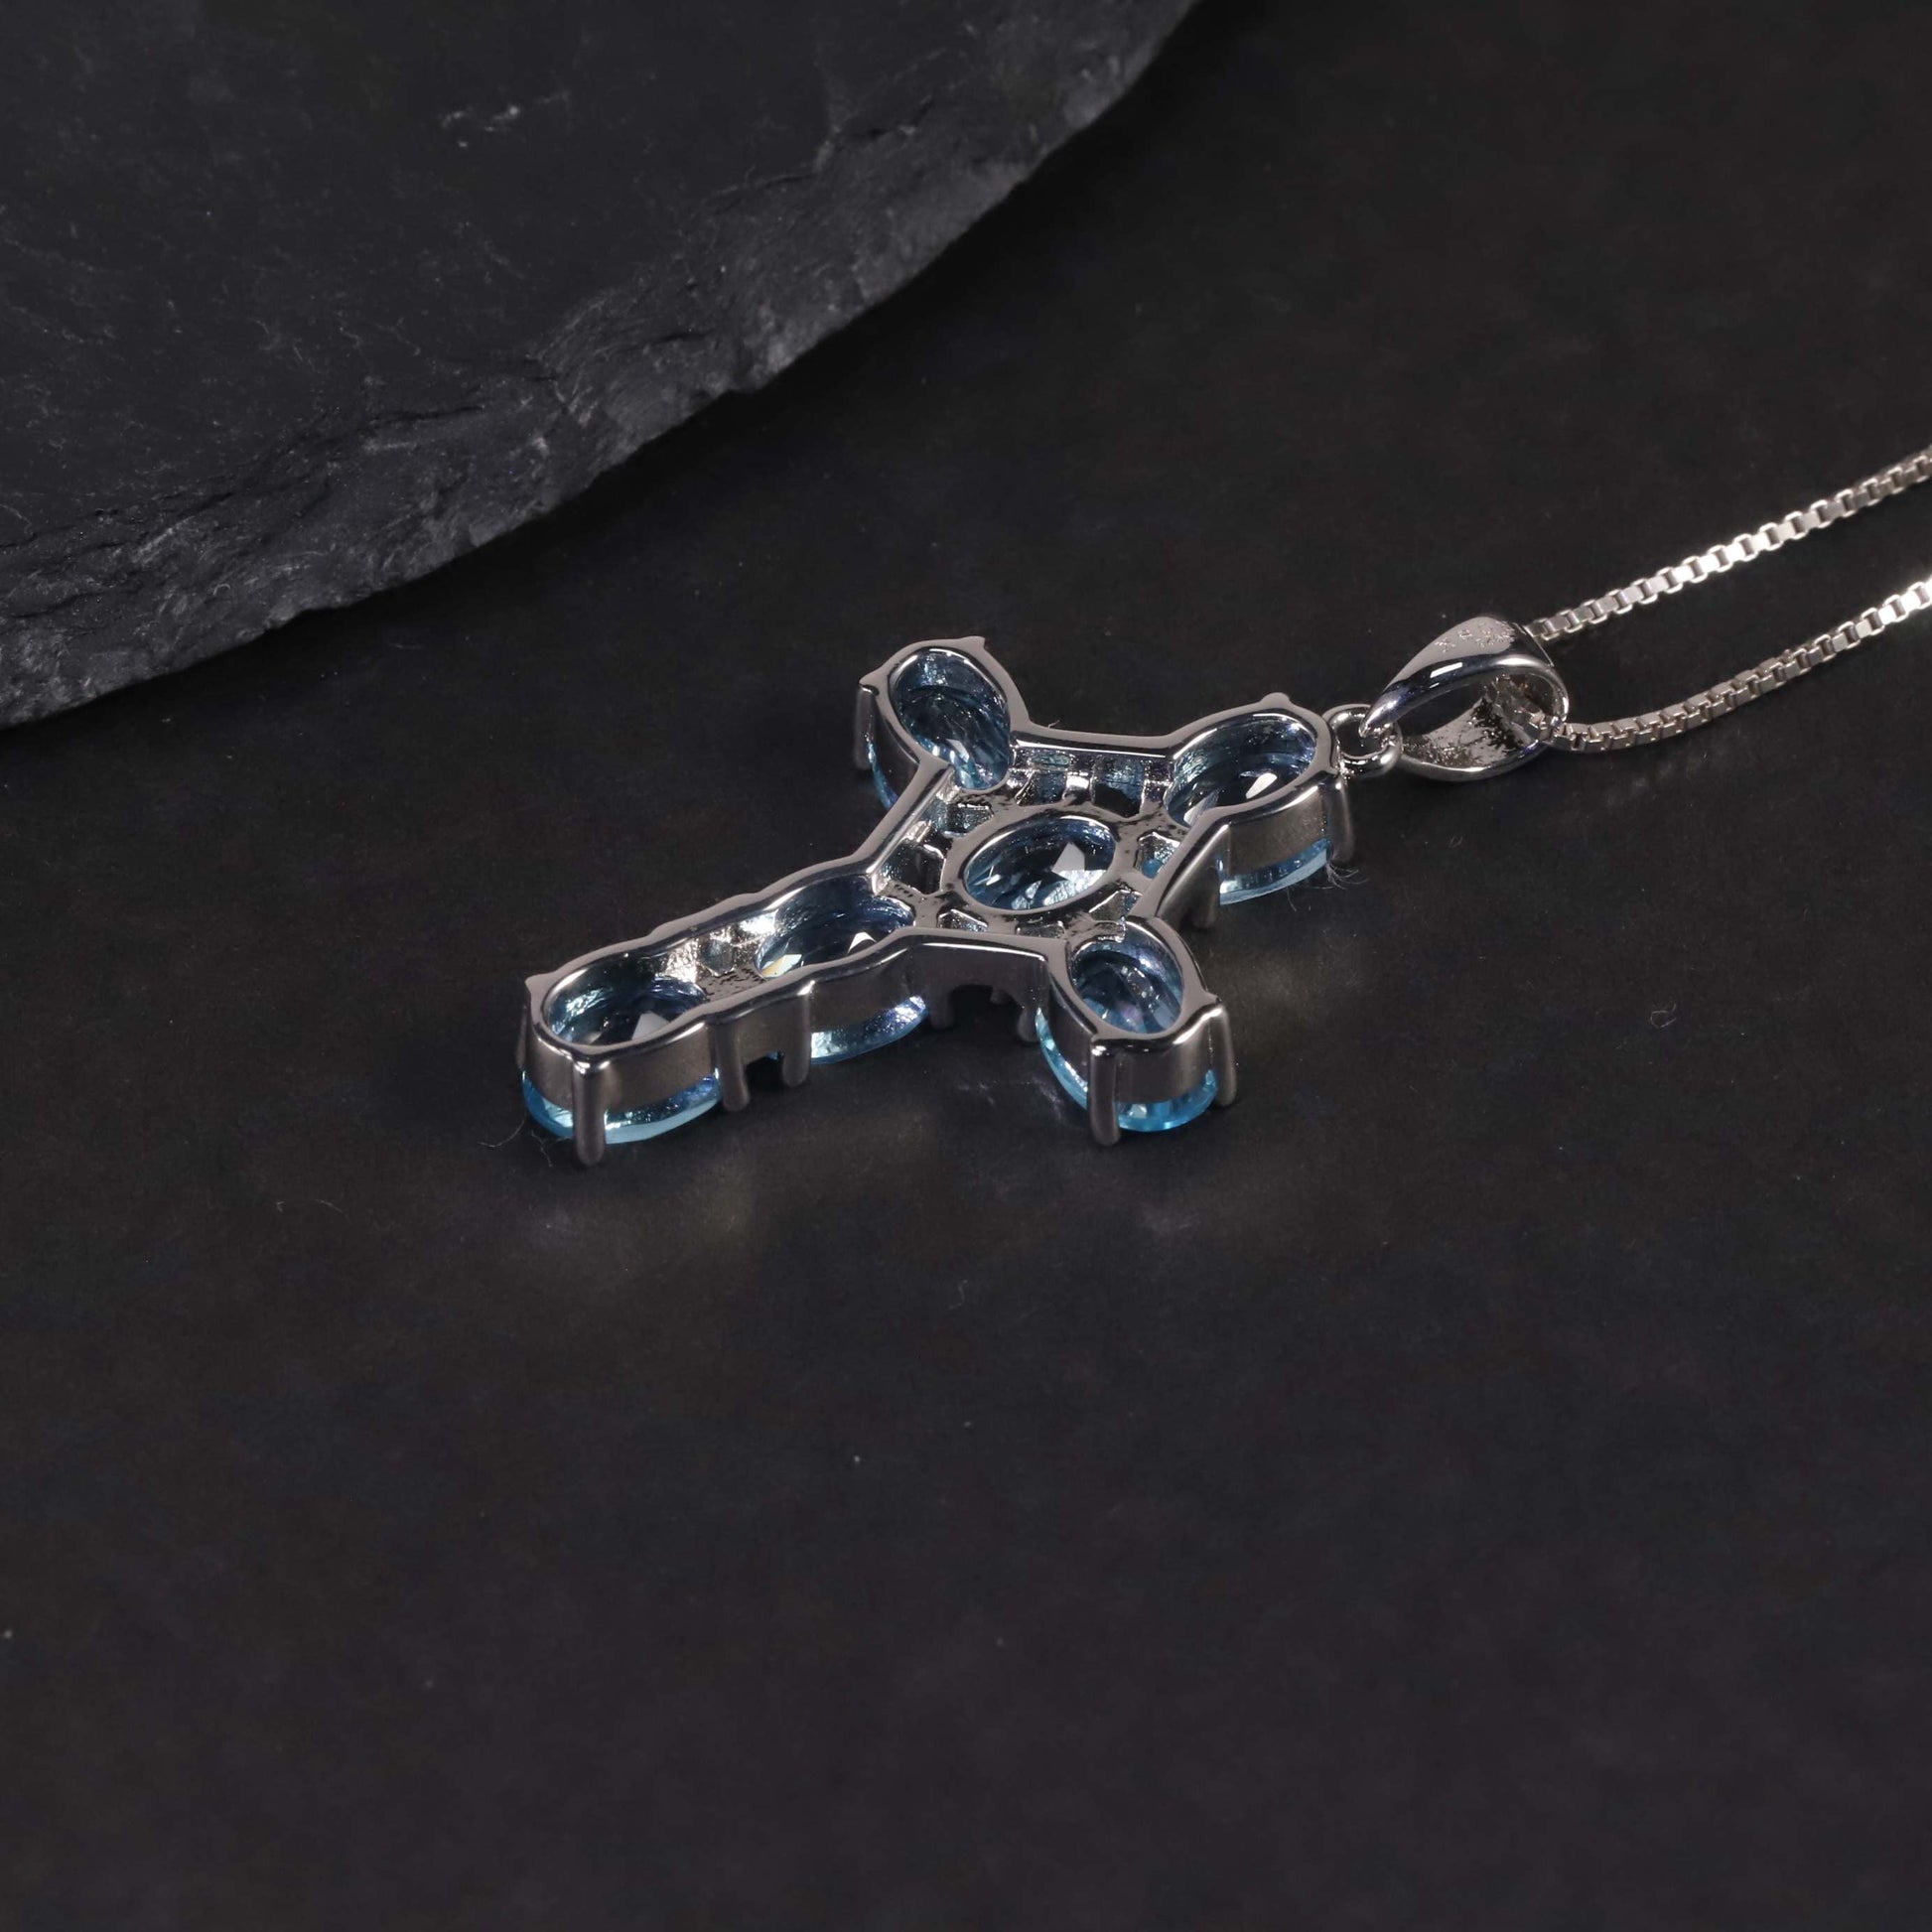 backside of cross pendant with dark background